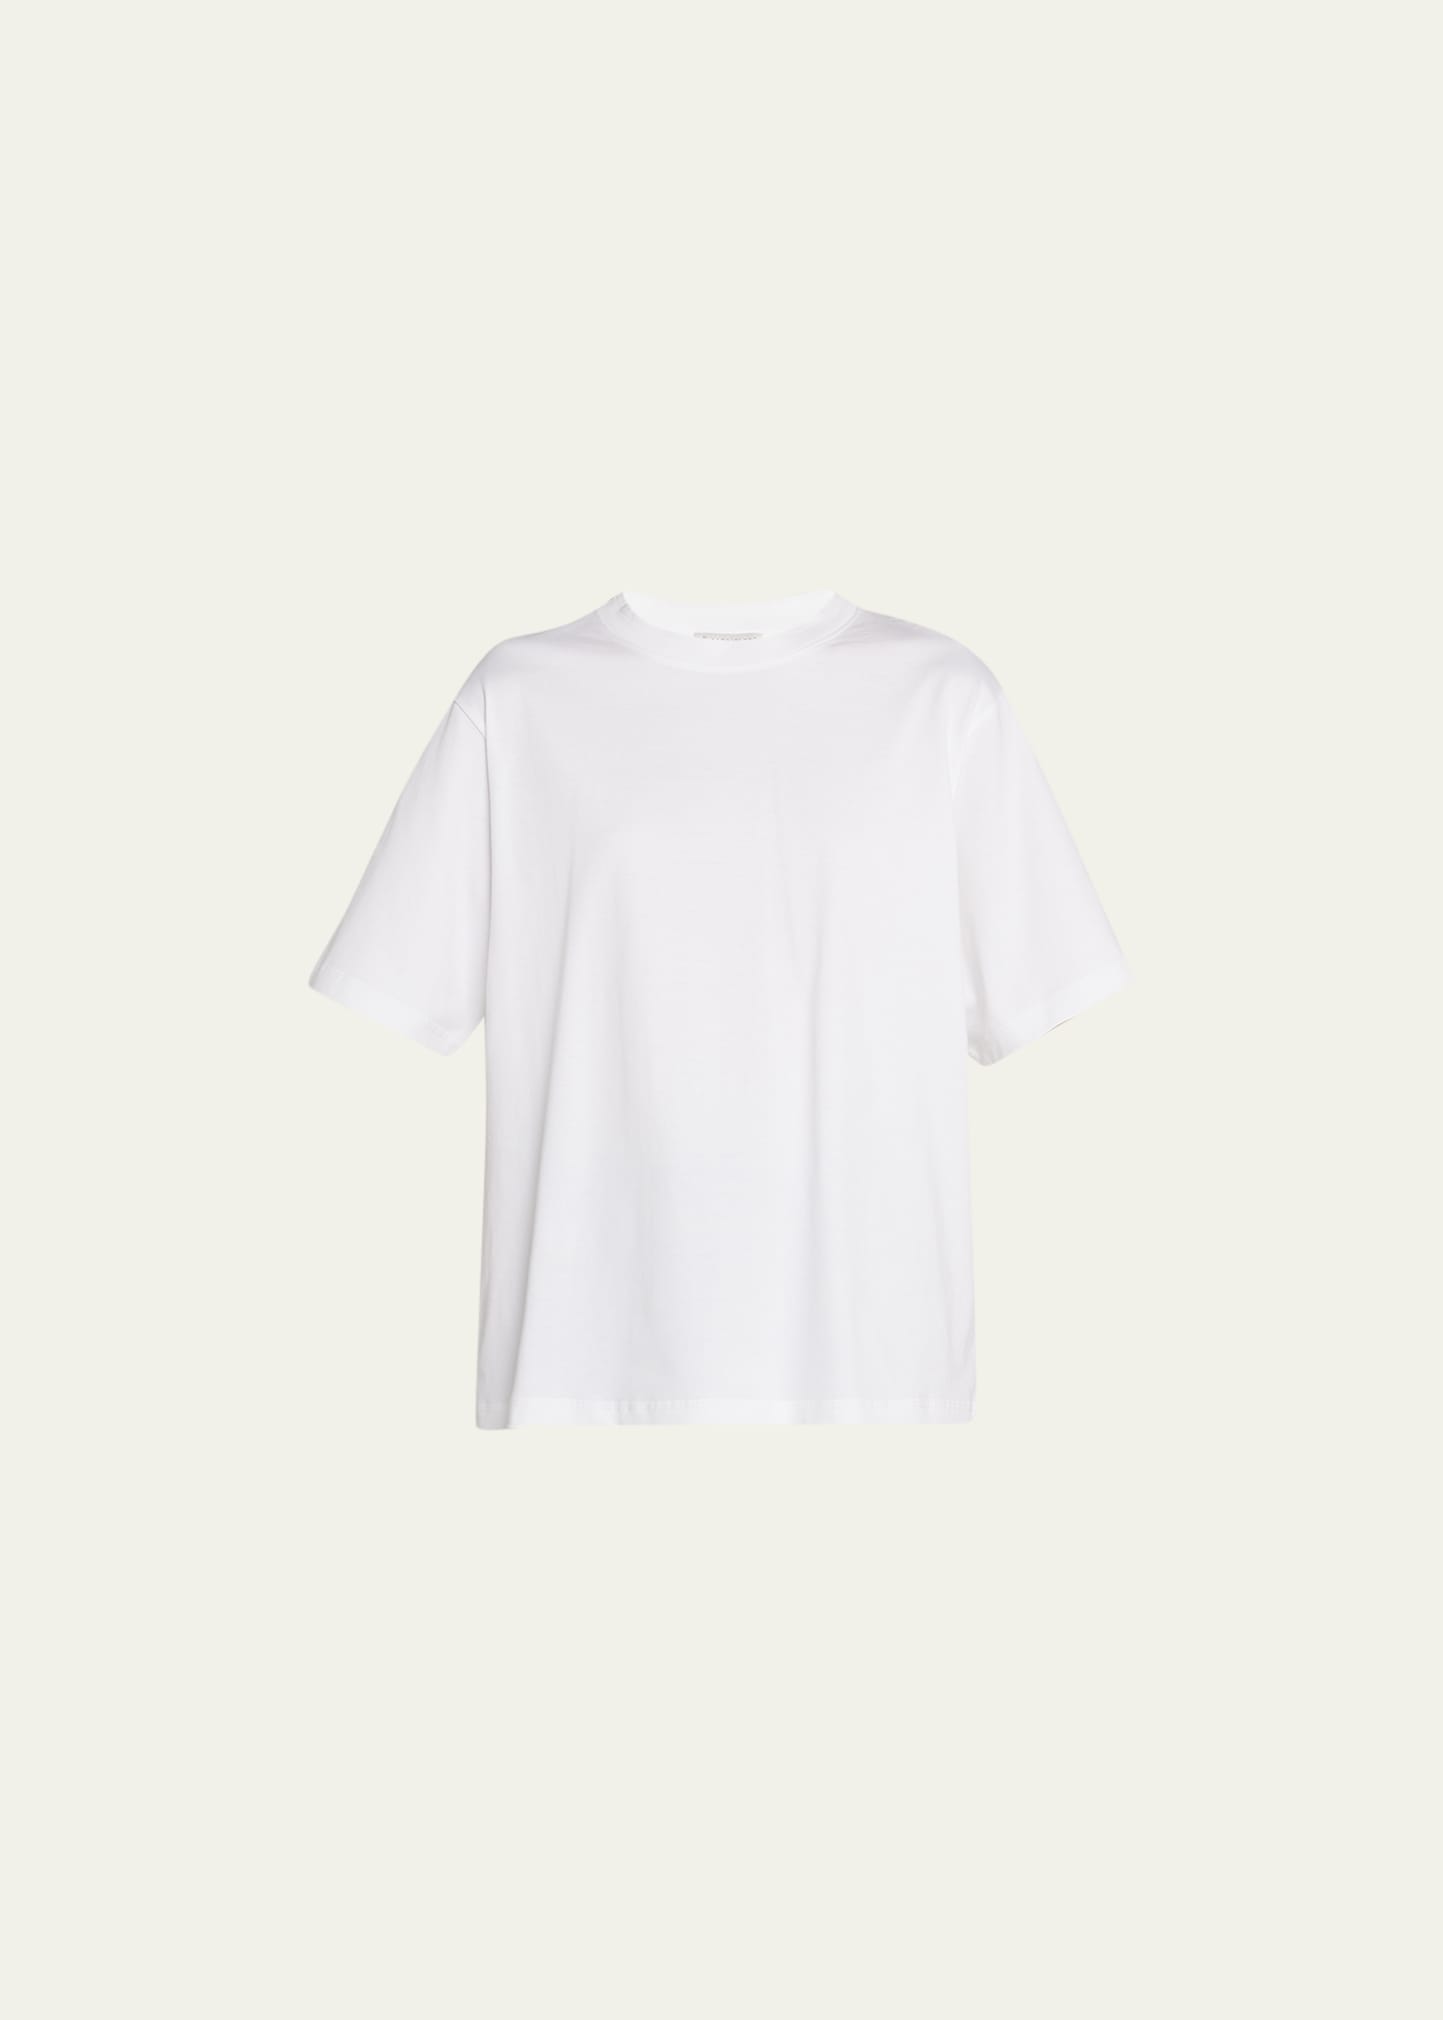 x Alicia Keys Printed Motif Short Sleeve T-Shirt